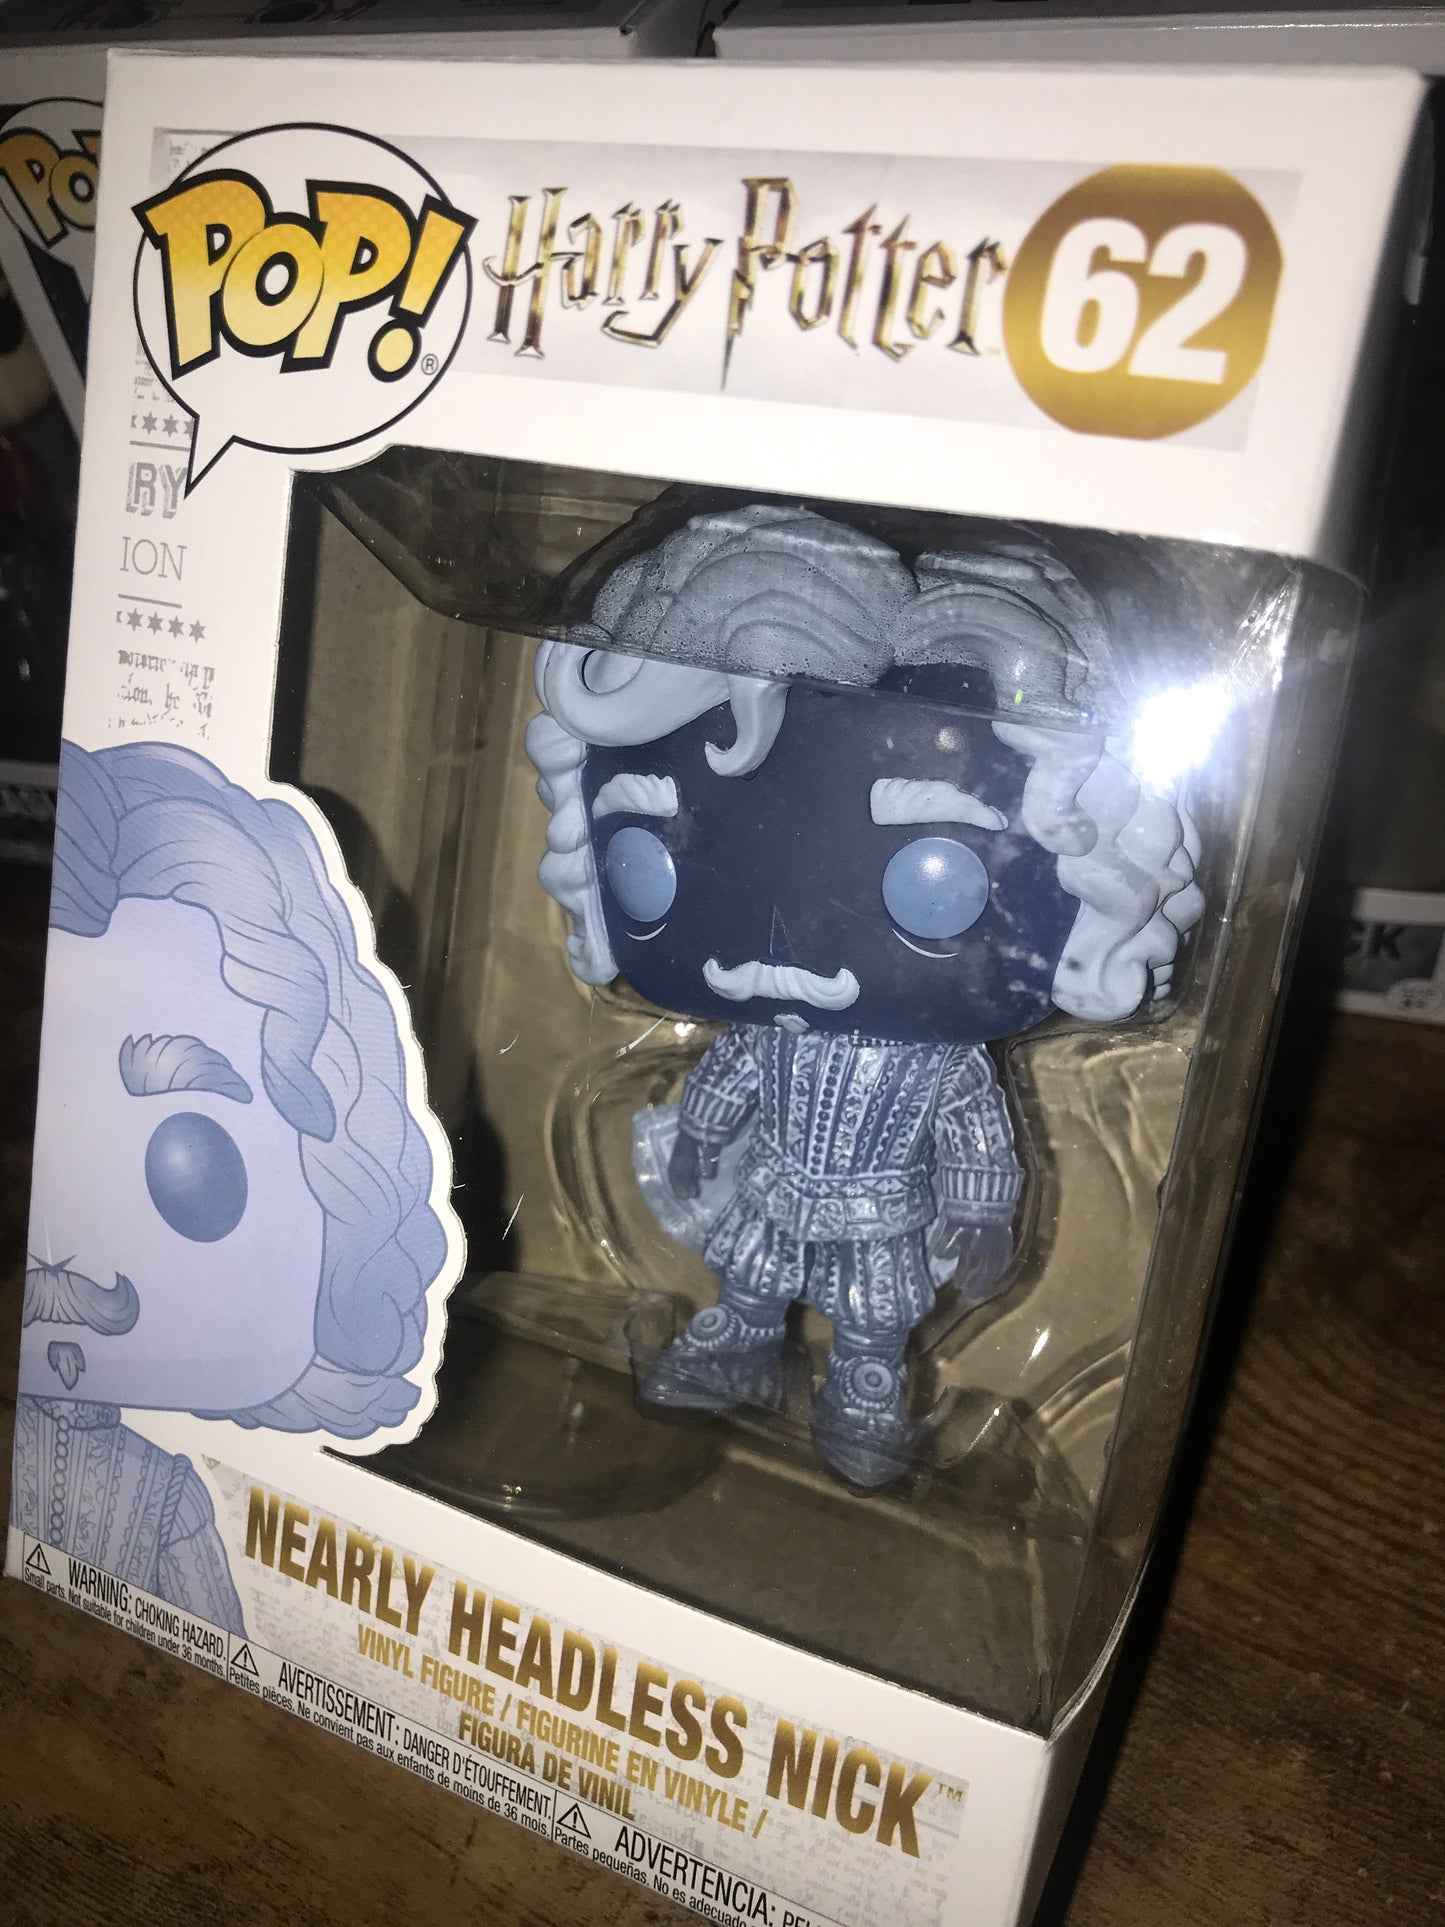 Harry Potter Nearly Headless nick Funko Pop! Vinyl figure 2020